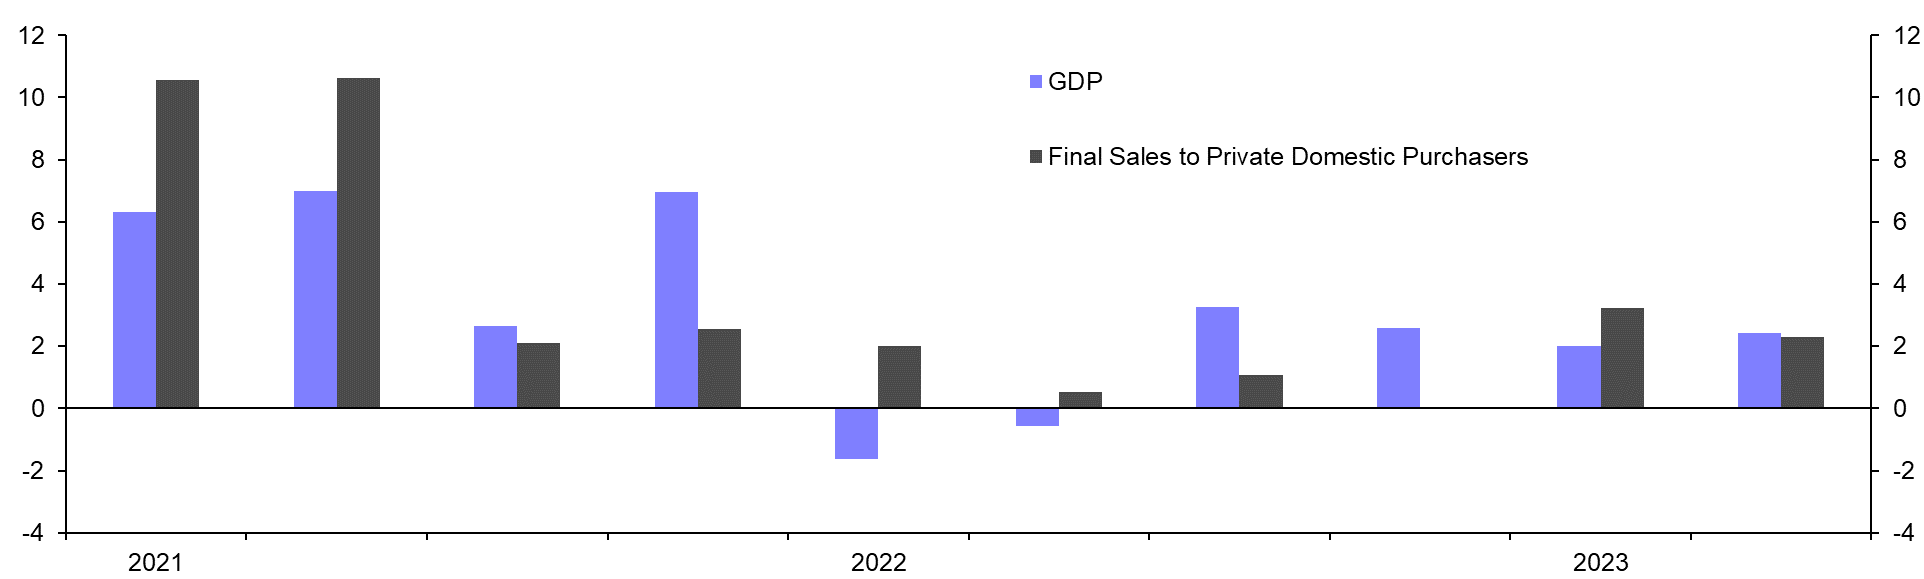 GDP (Q2)
